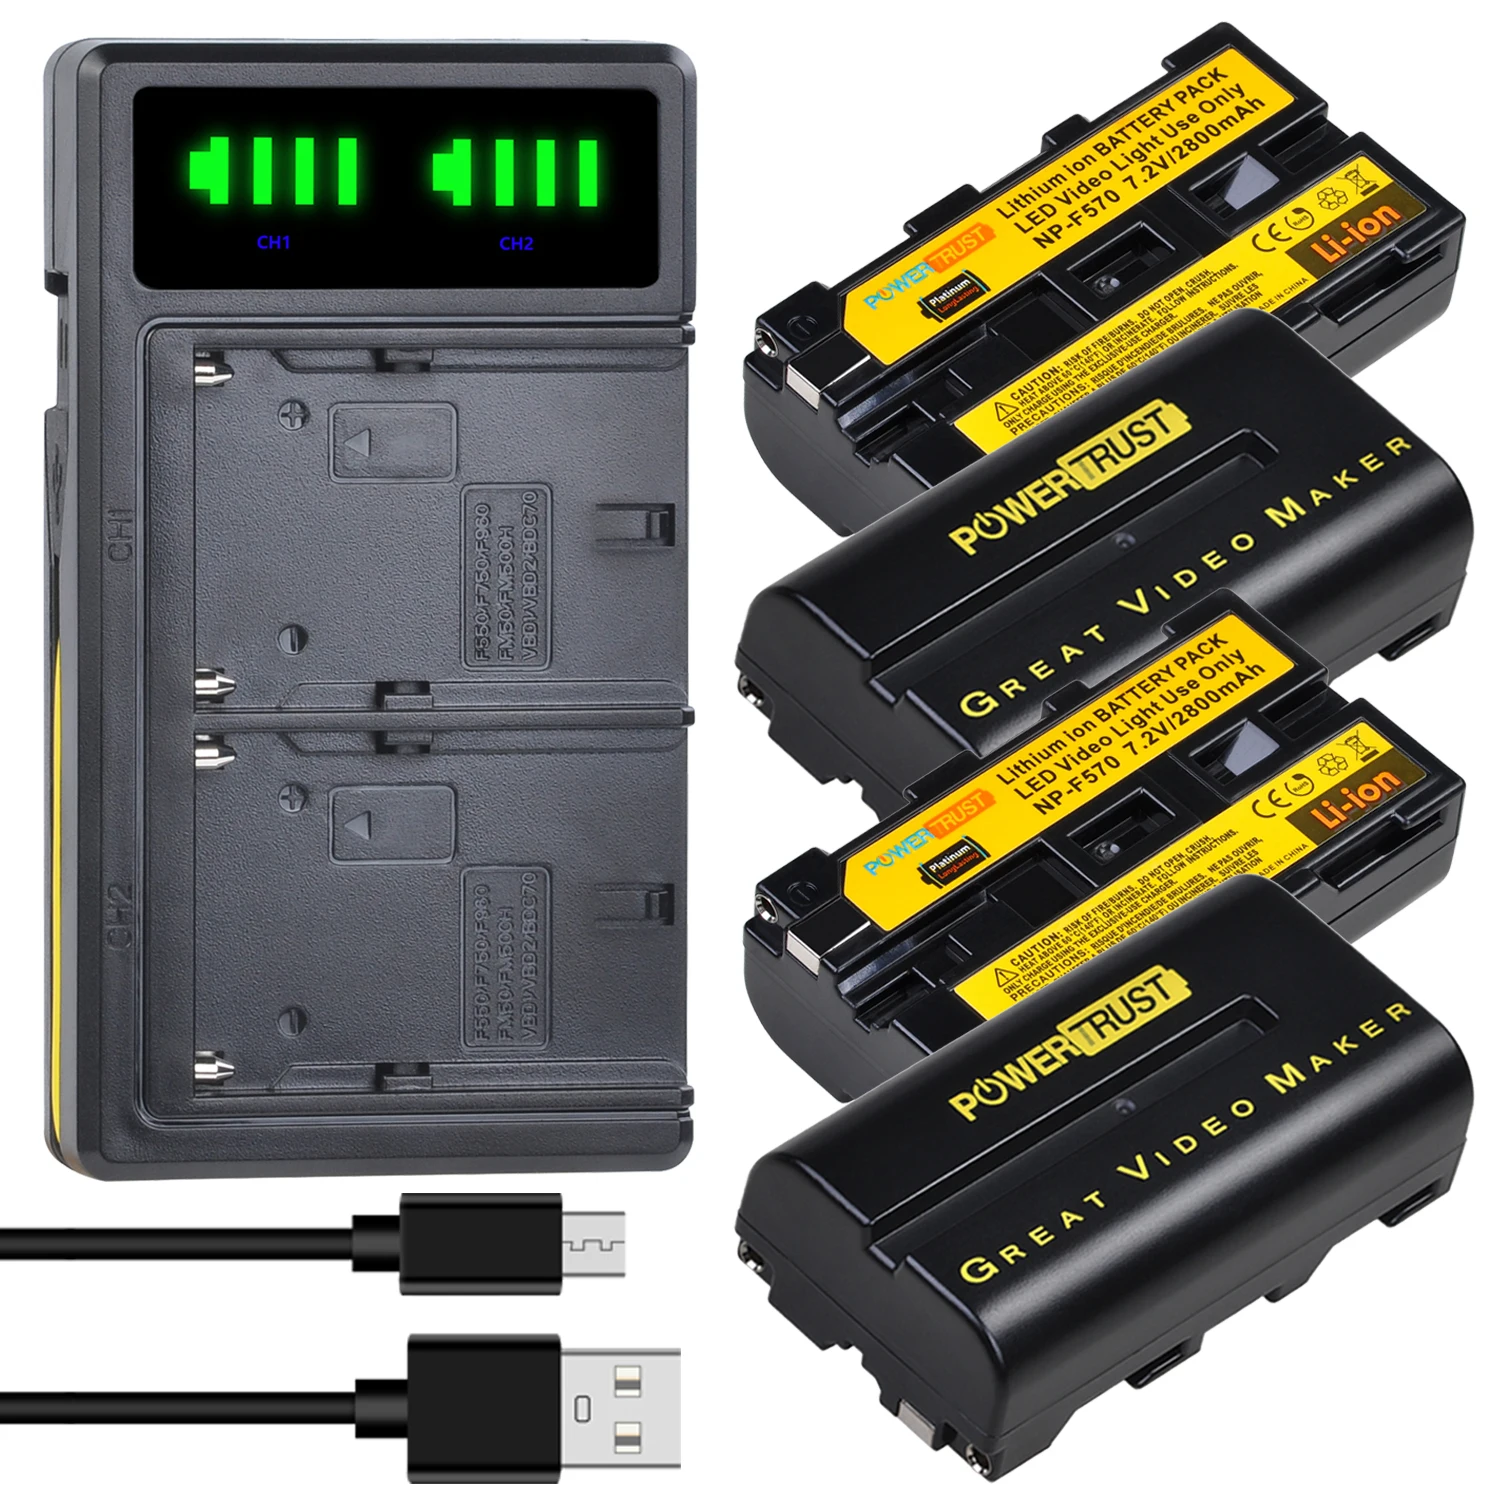 

2800mAh NP-F550 NP-F570 Battery+New LED USB Dual Charger for Yongnuo Viltrox LED Video Light YN300 II YN300 III YN600 Air